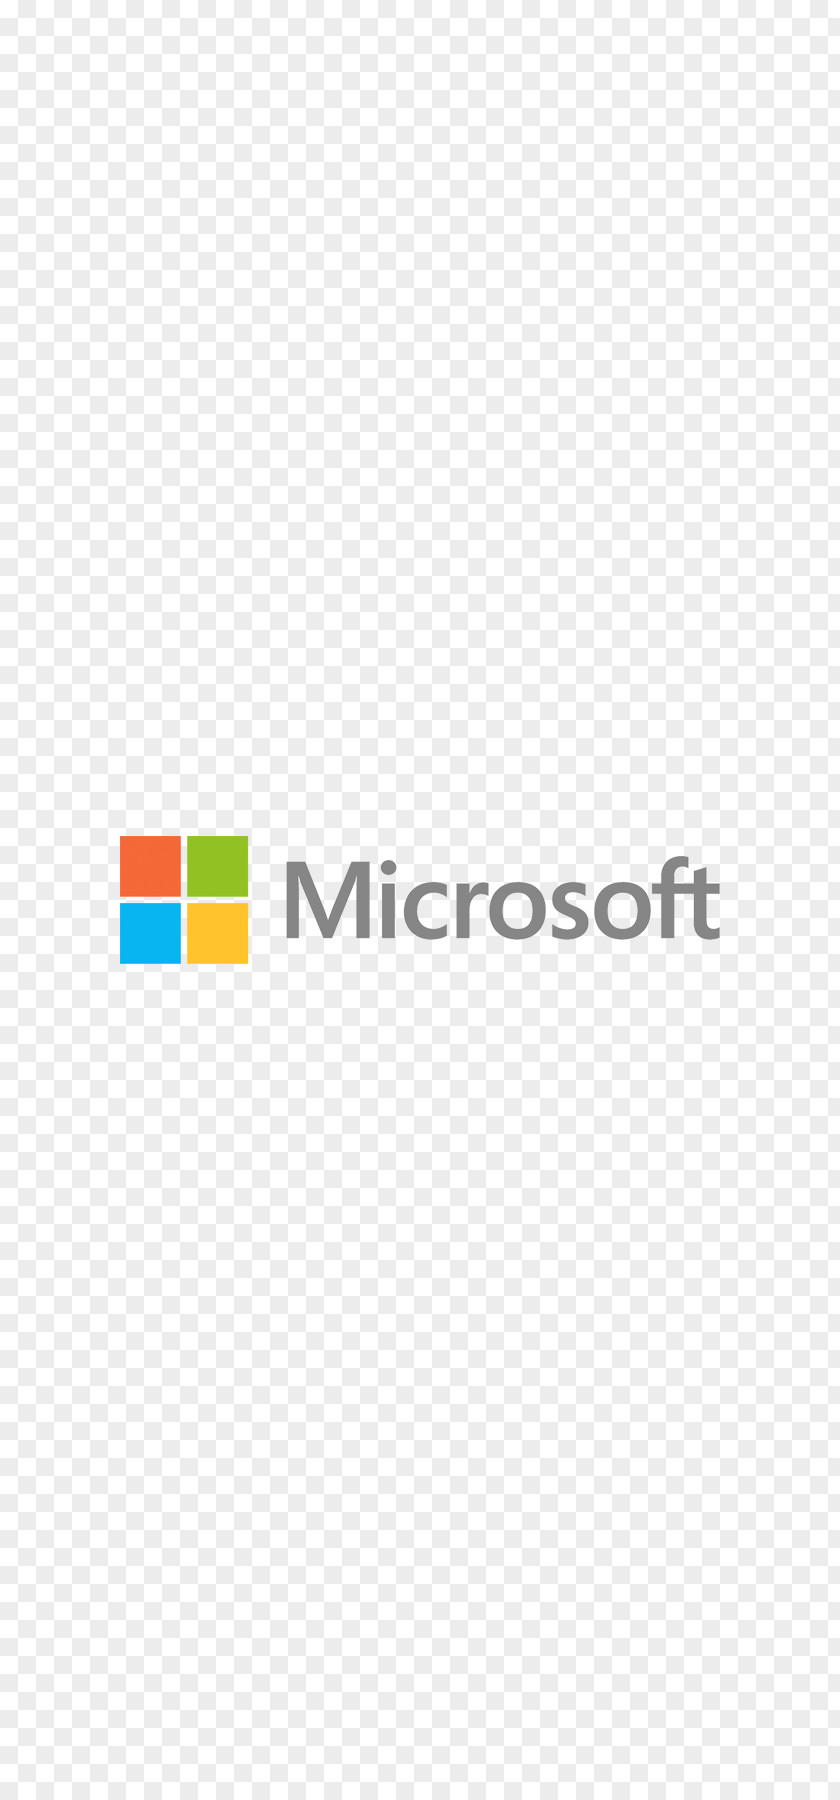 Microsoft Client Access License Remote Desktop Services Technology PNG